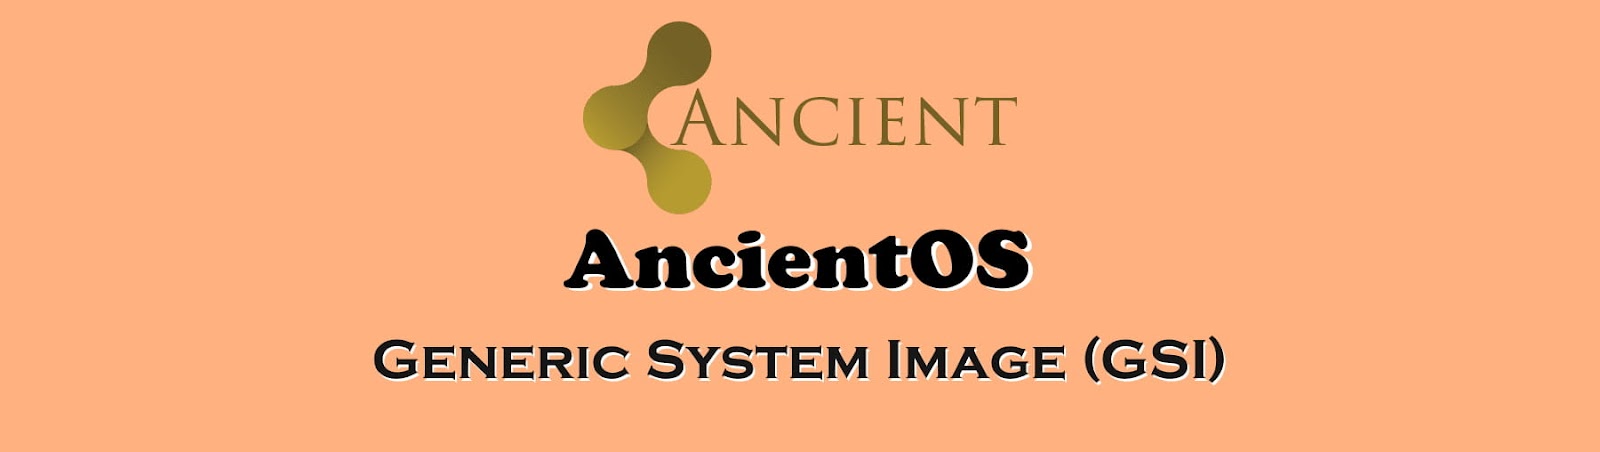 AncientOS logo banner illustration